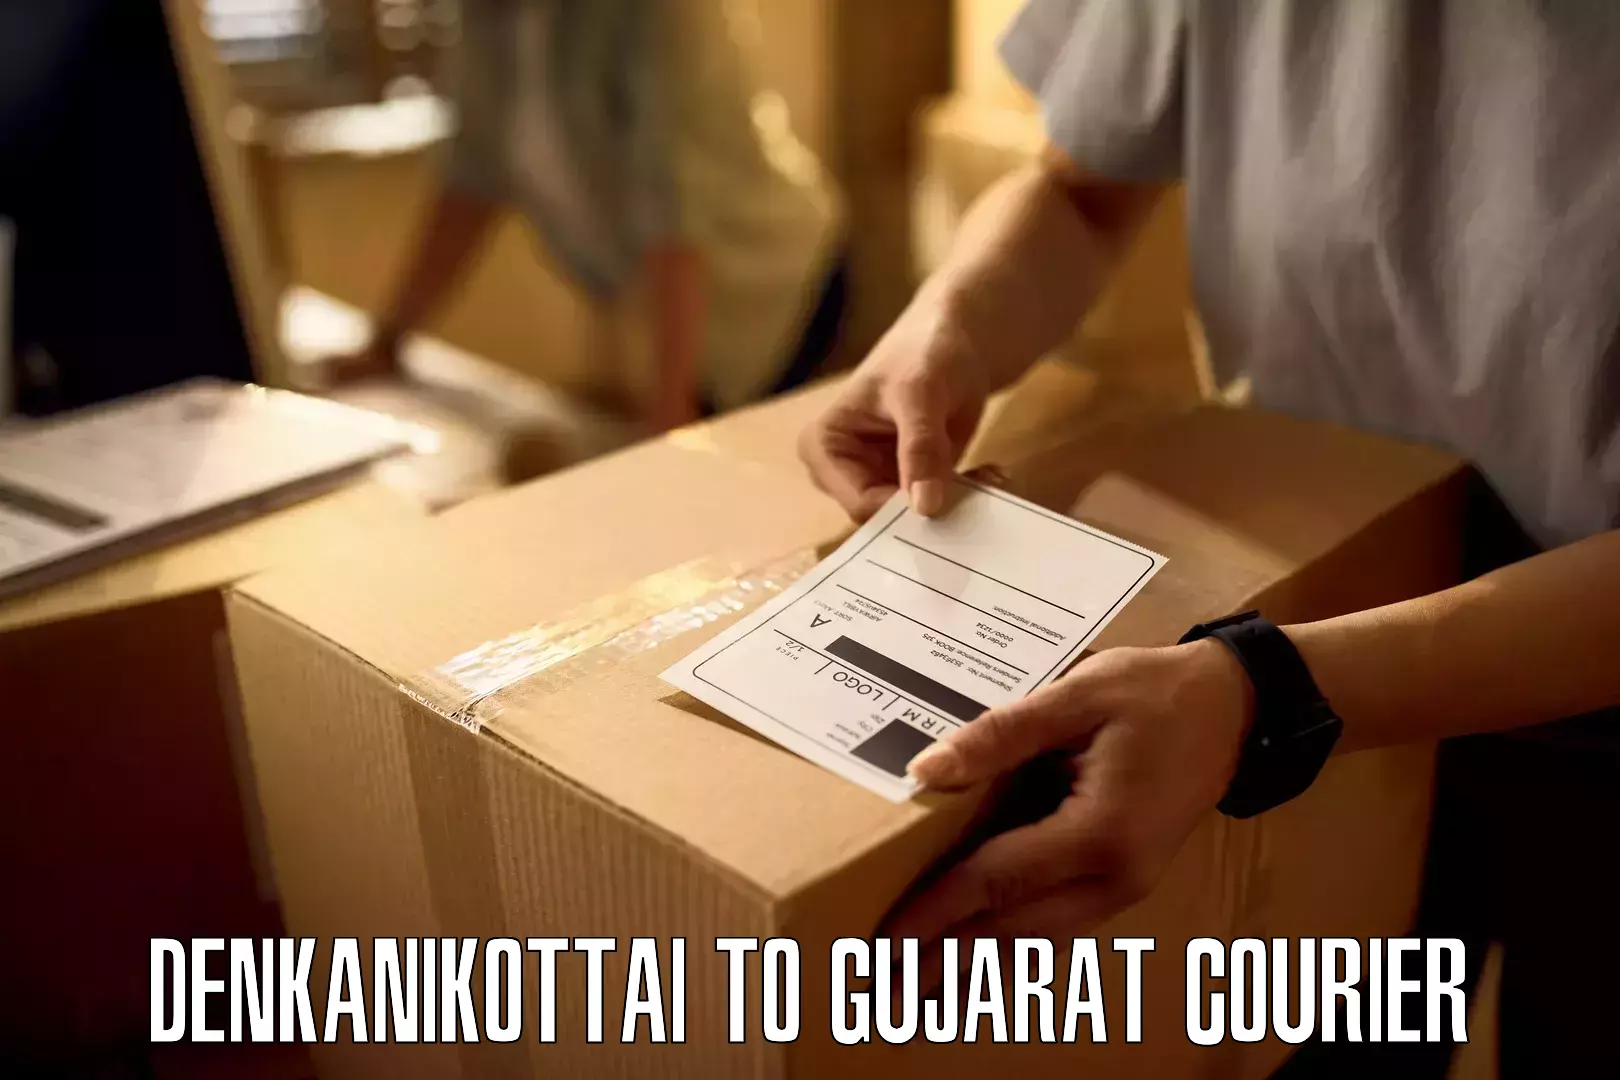 Courier membership in Denkanikottai to Gujarat